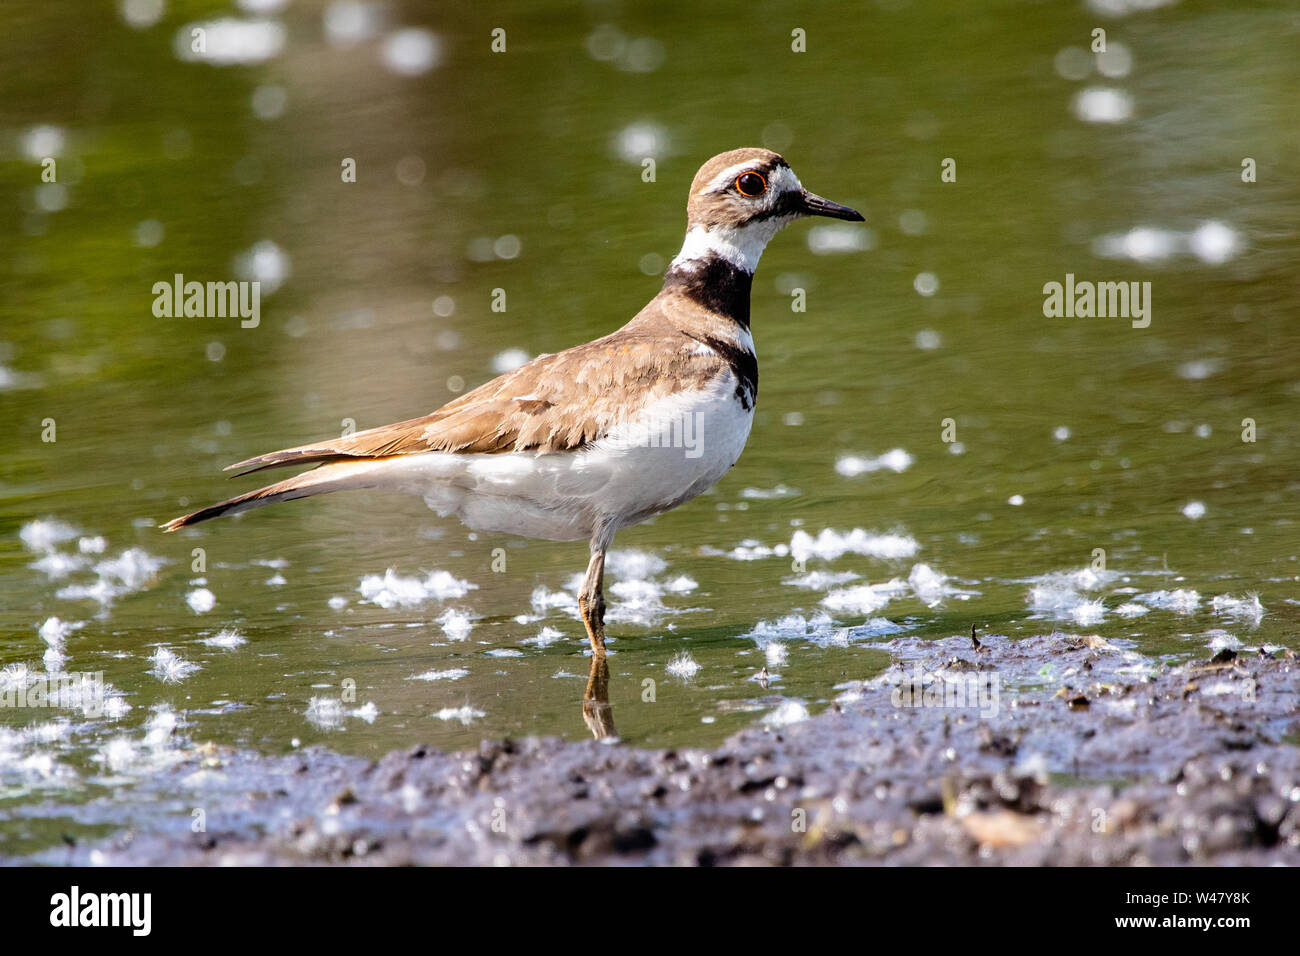 Fauna Birds Shorebirds Plover Killdeer Charadrius Vociferus Green Pond Background Stock Photo